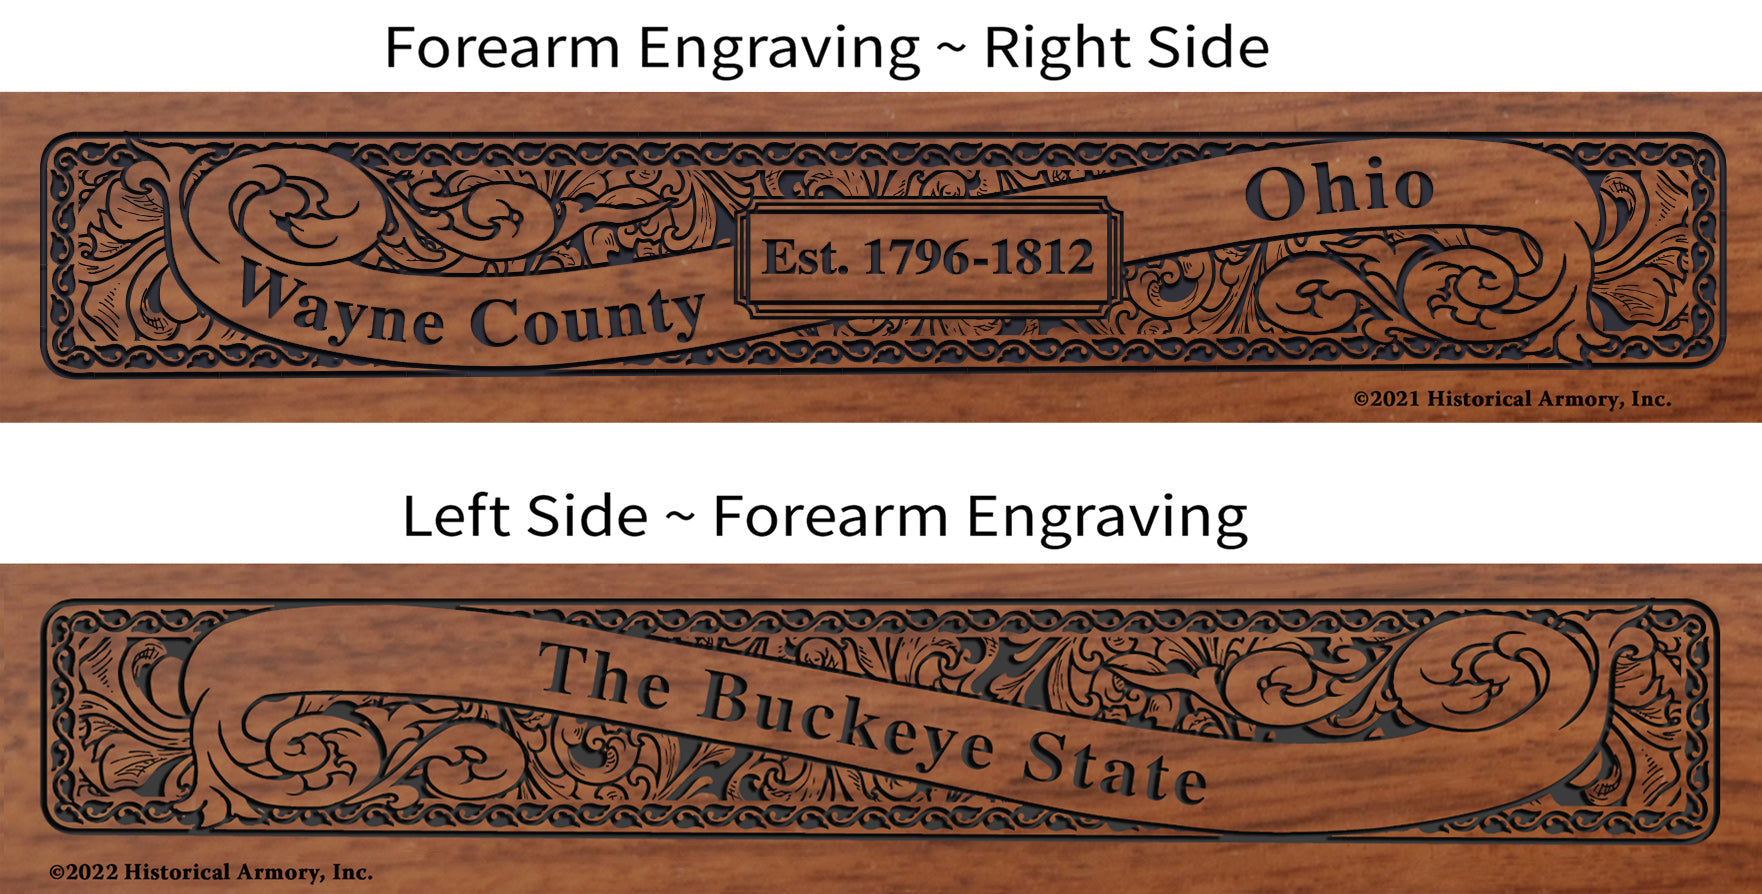 Wayne County Ohio Engraved Rifle Forearm